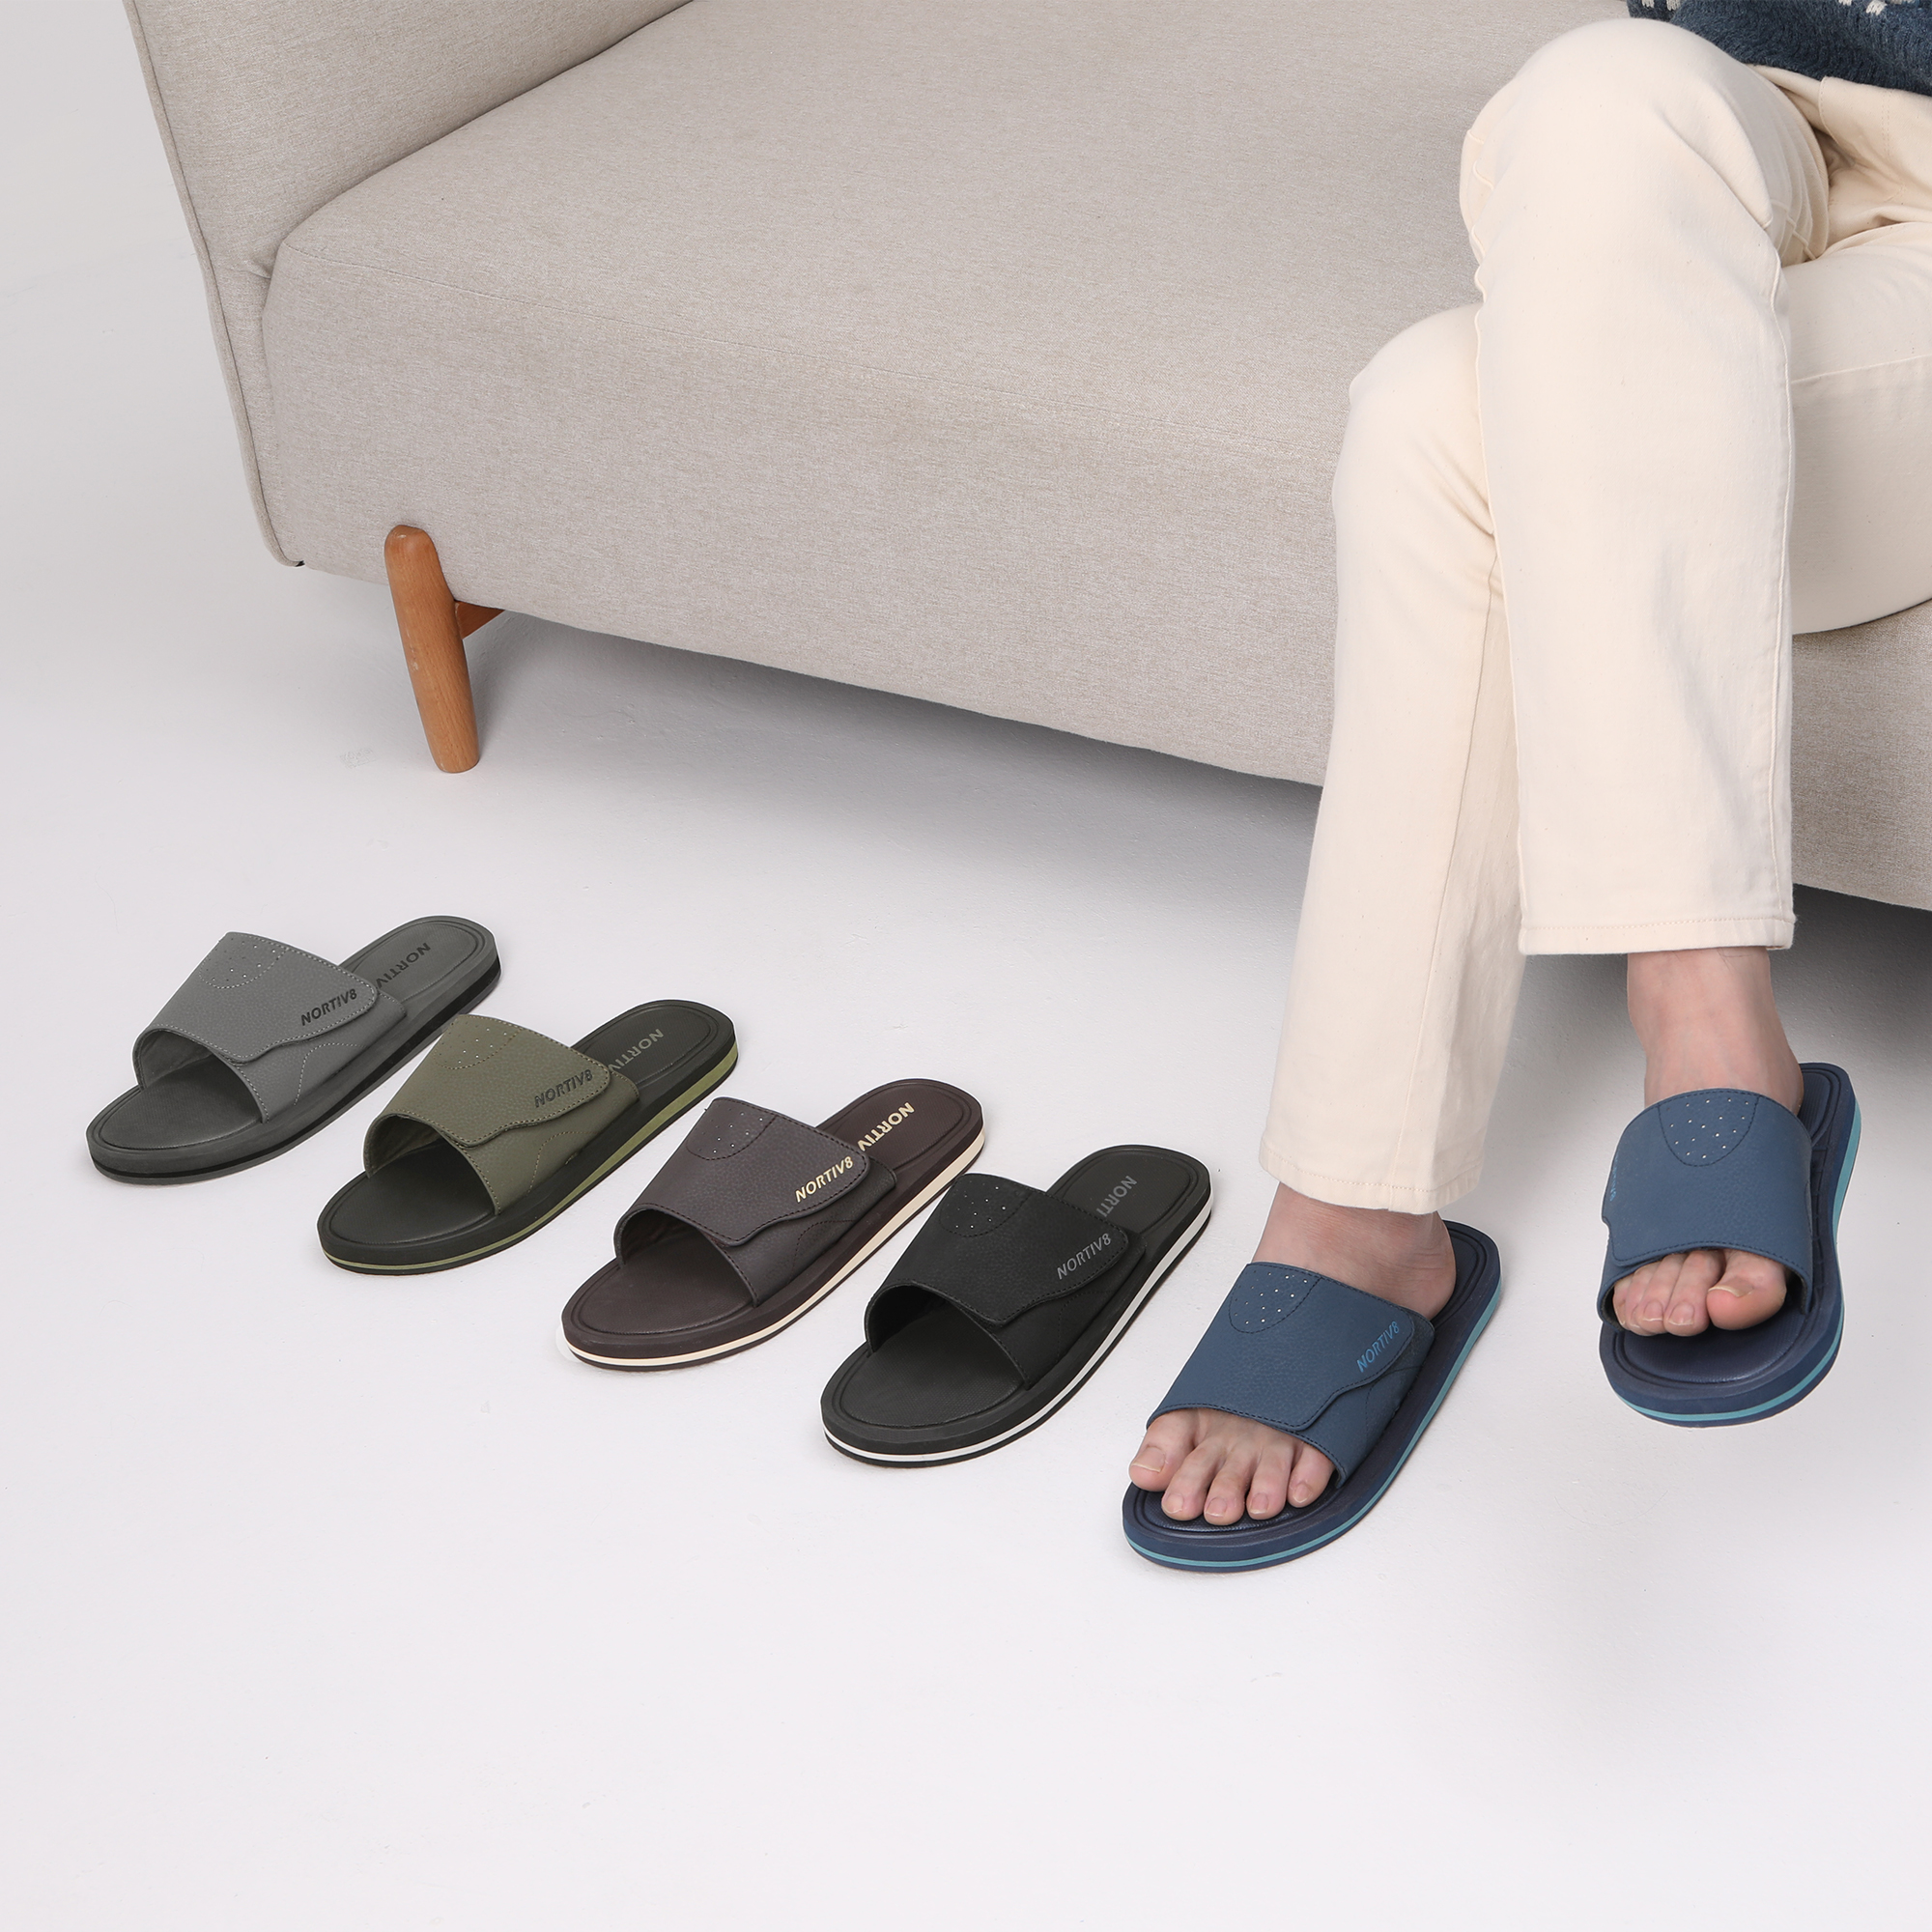 NORTIV 8 Men's Memory Foam Adjustable Slide Sandals Comfort Lightweight ...